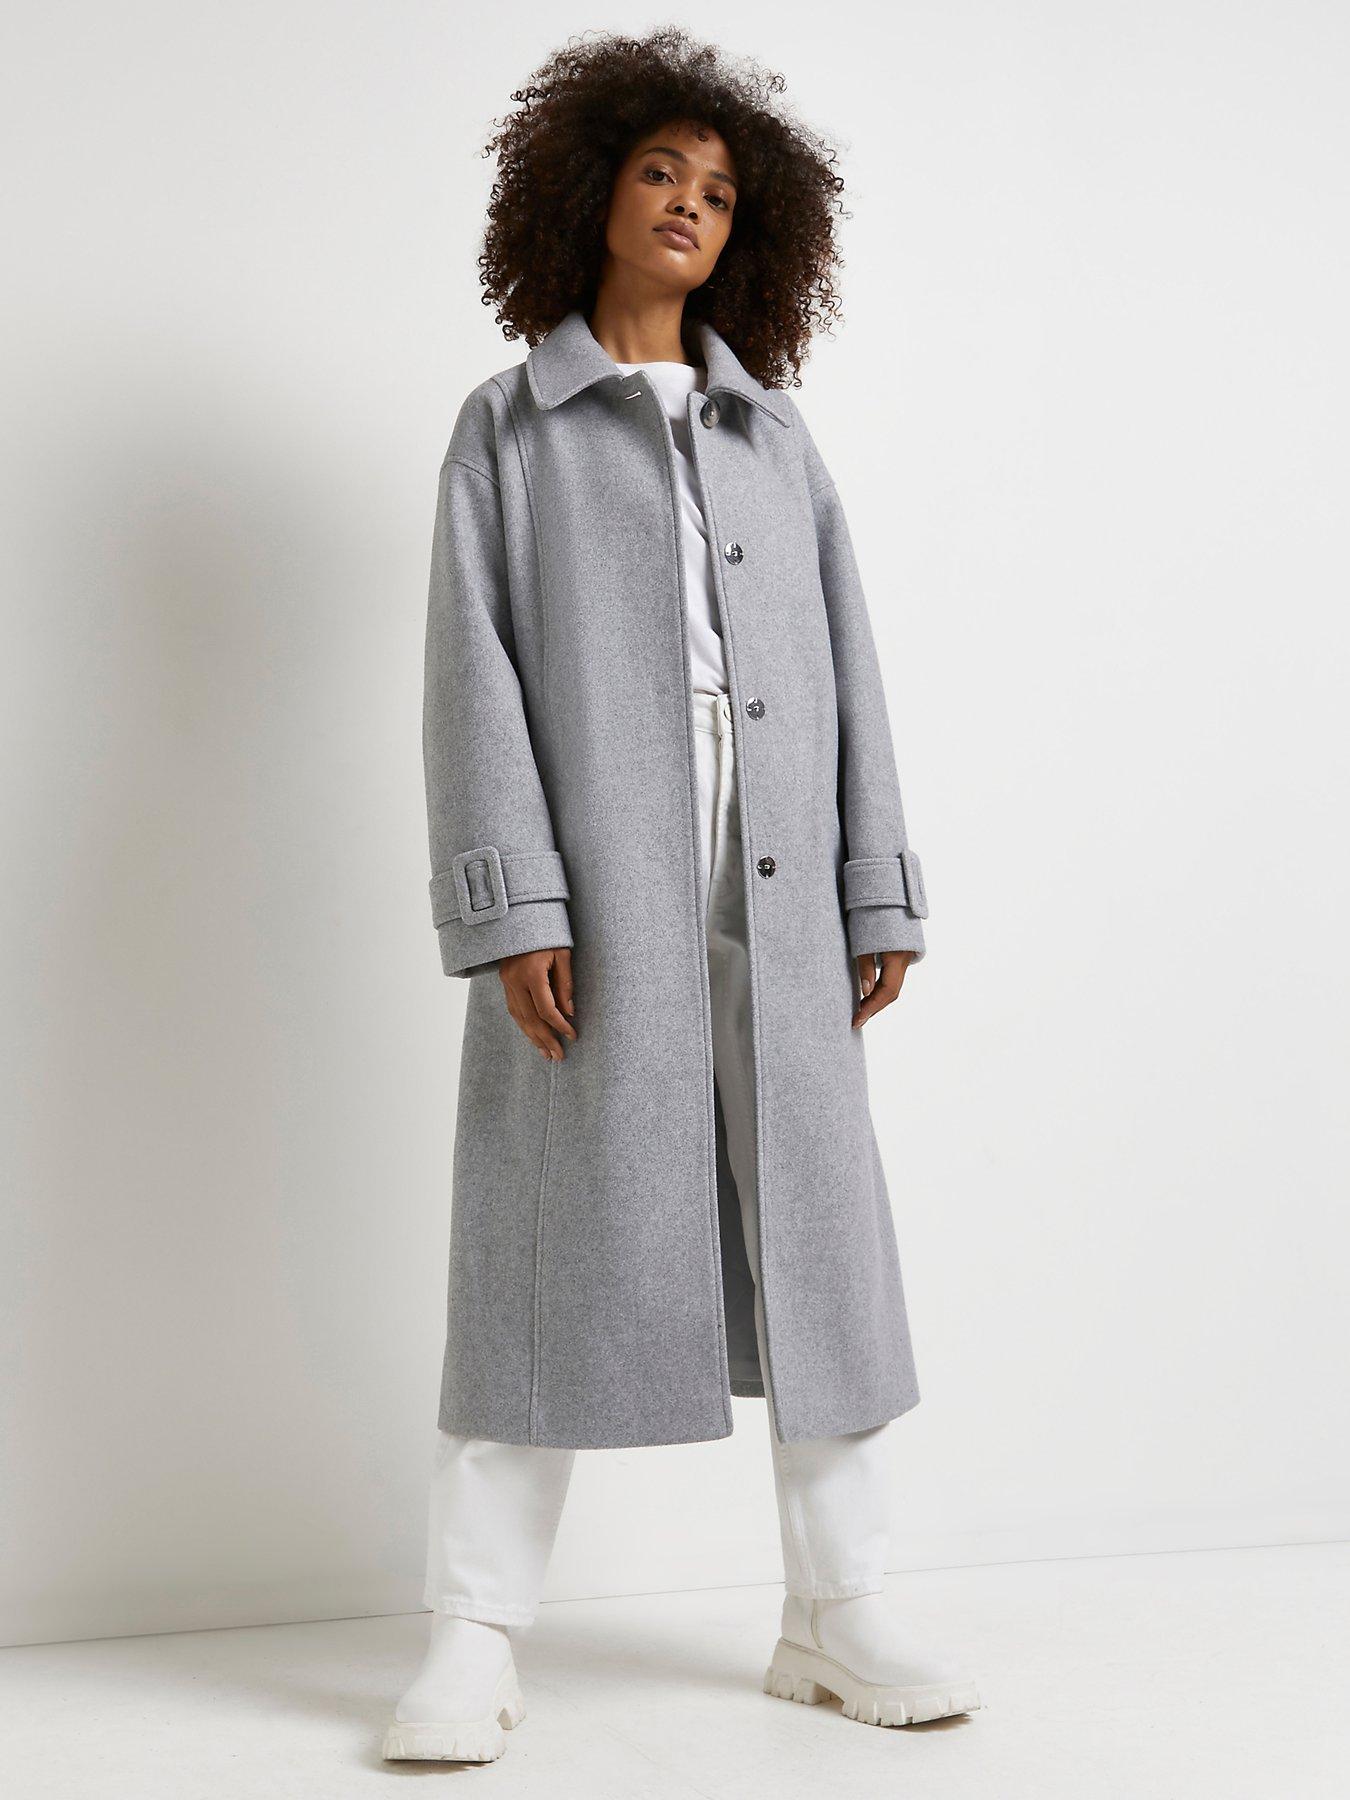  pCollar Belted Coat - Grey/p